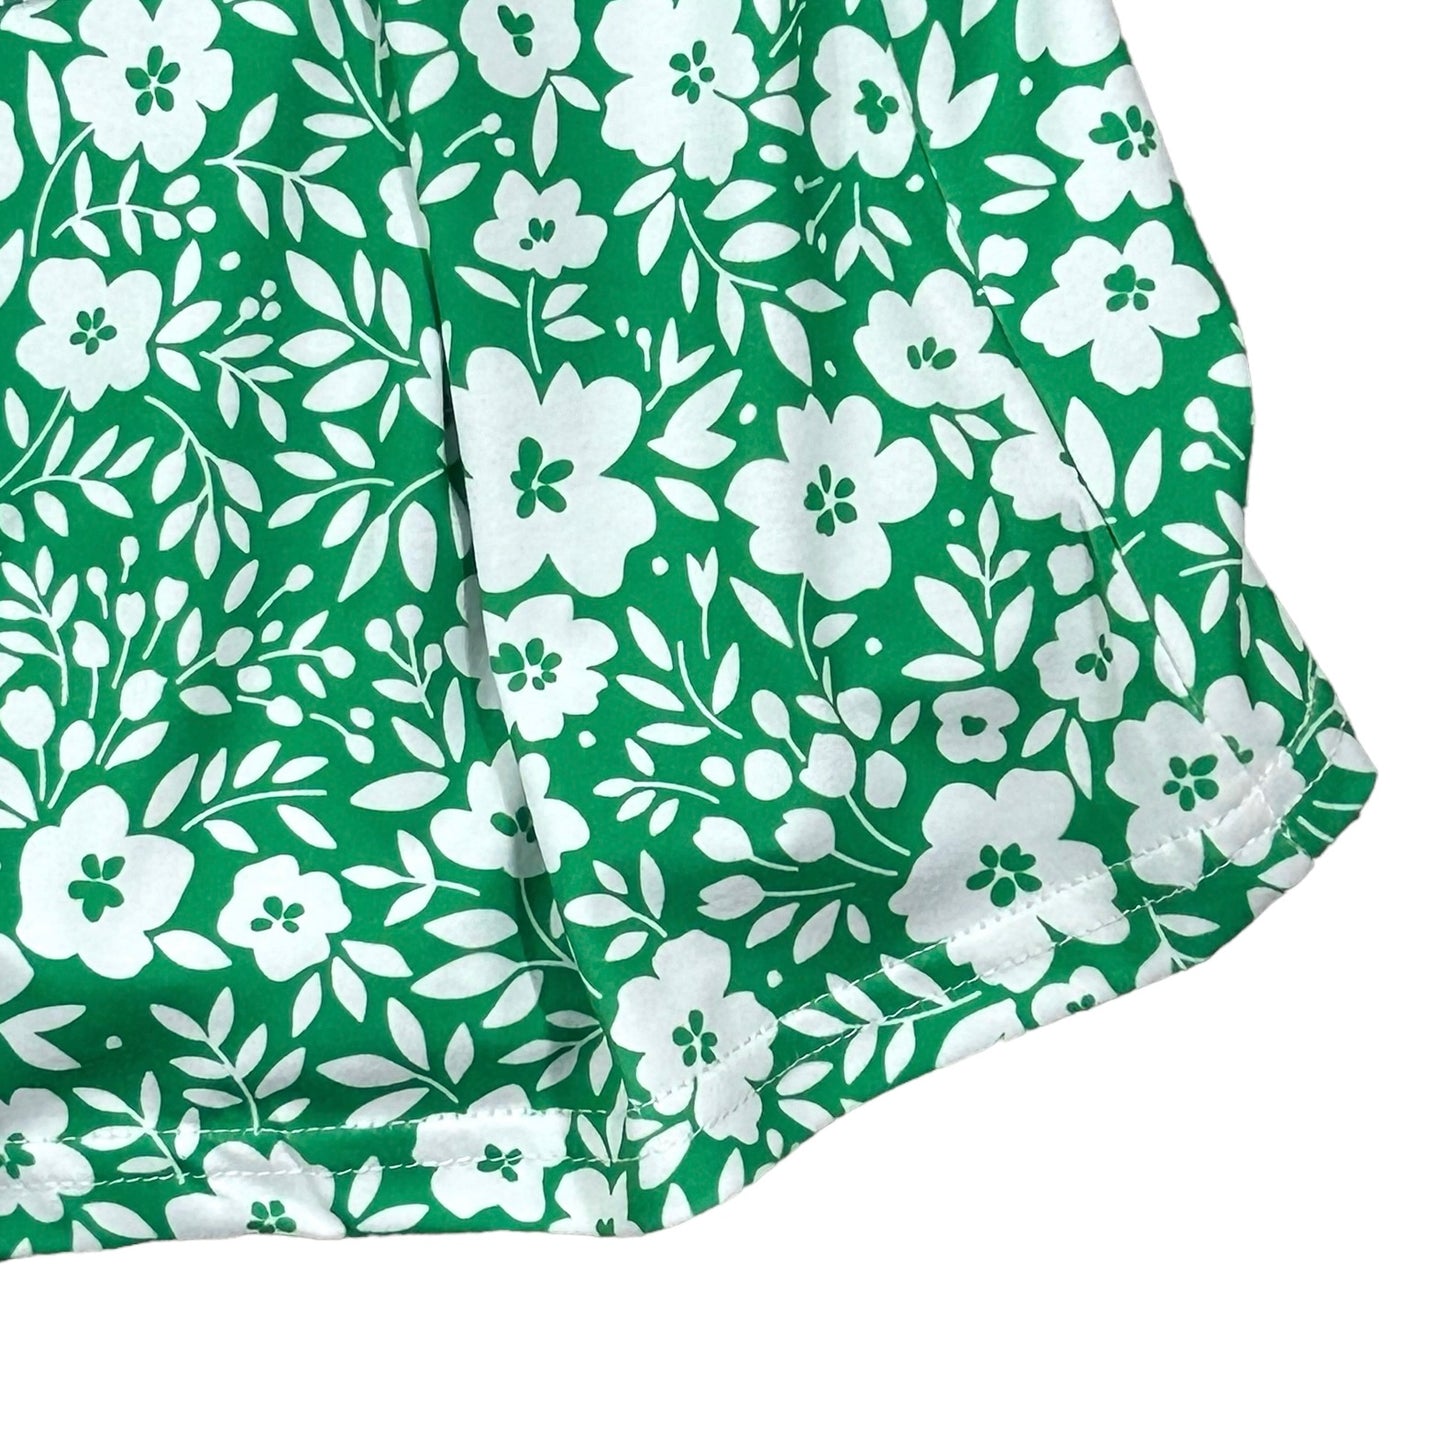 Twirl Dress - Emerald Ditsy Floral